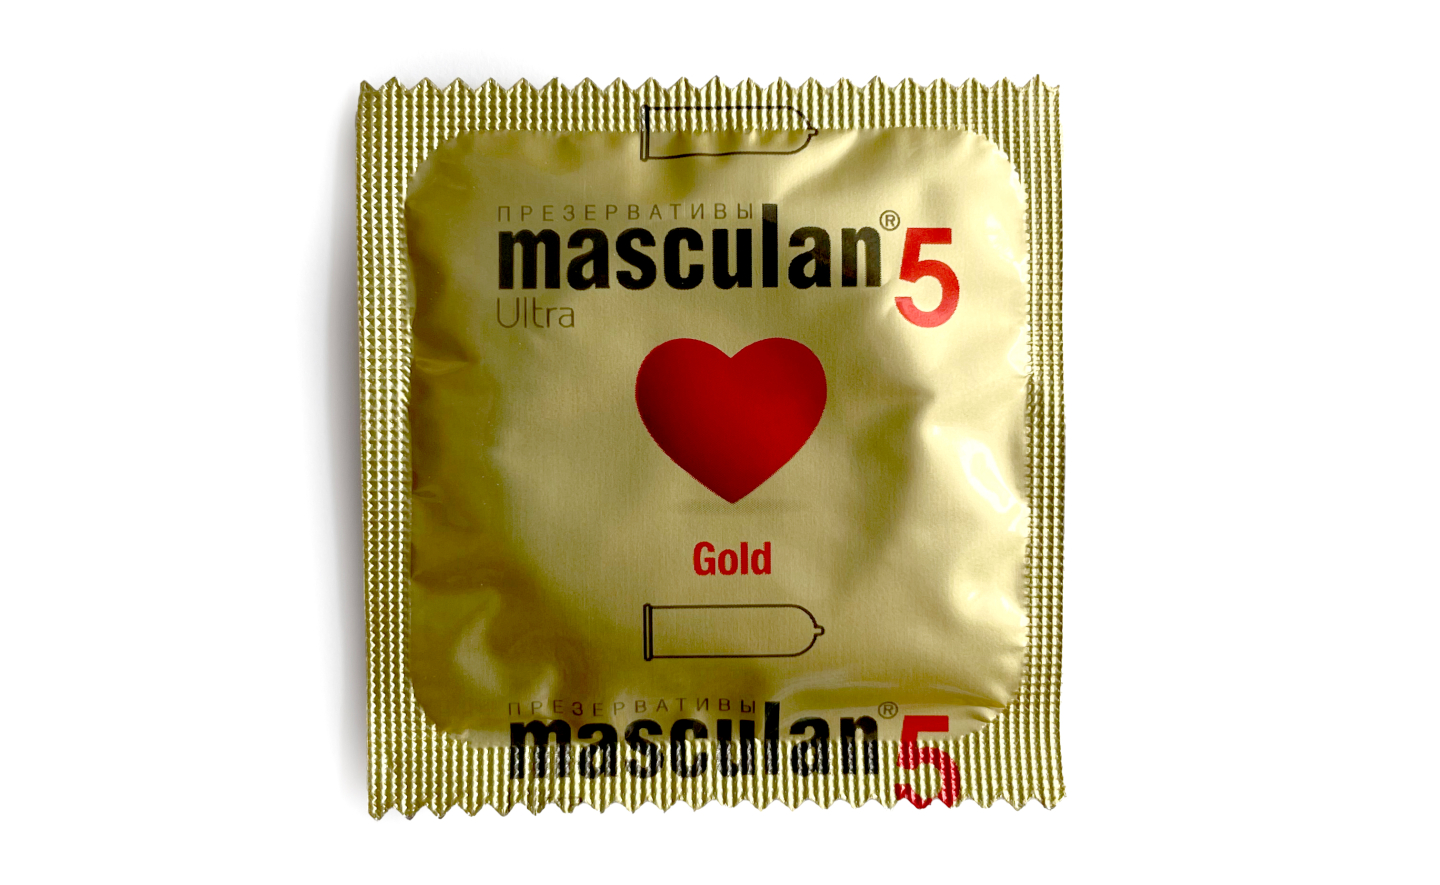 masculan gold